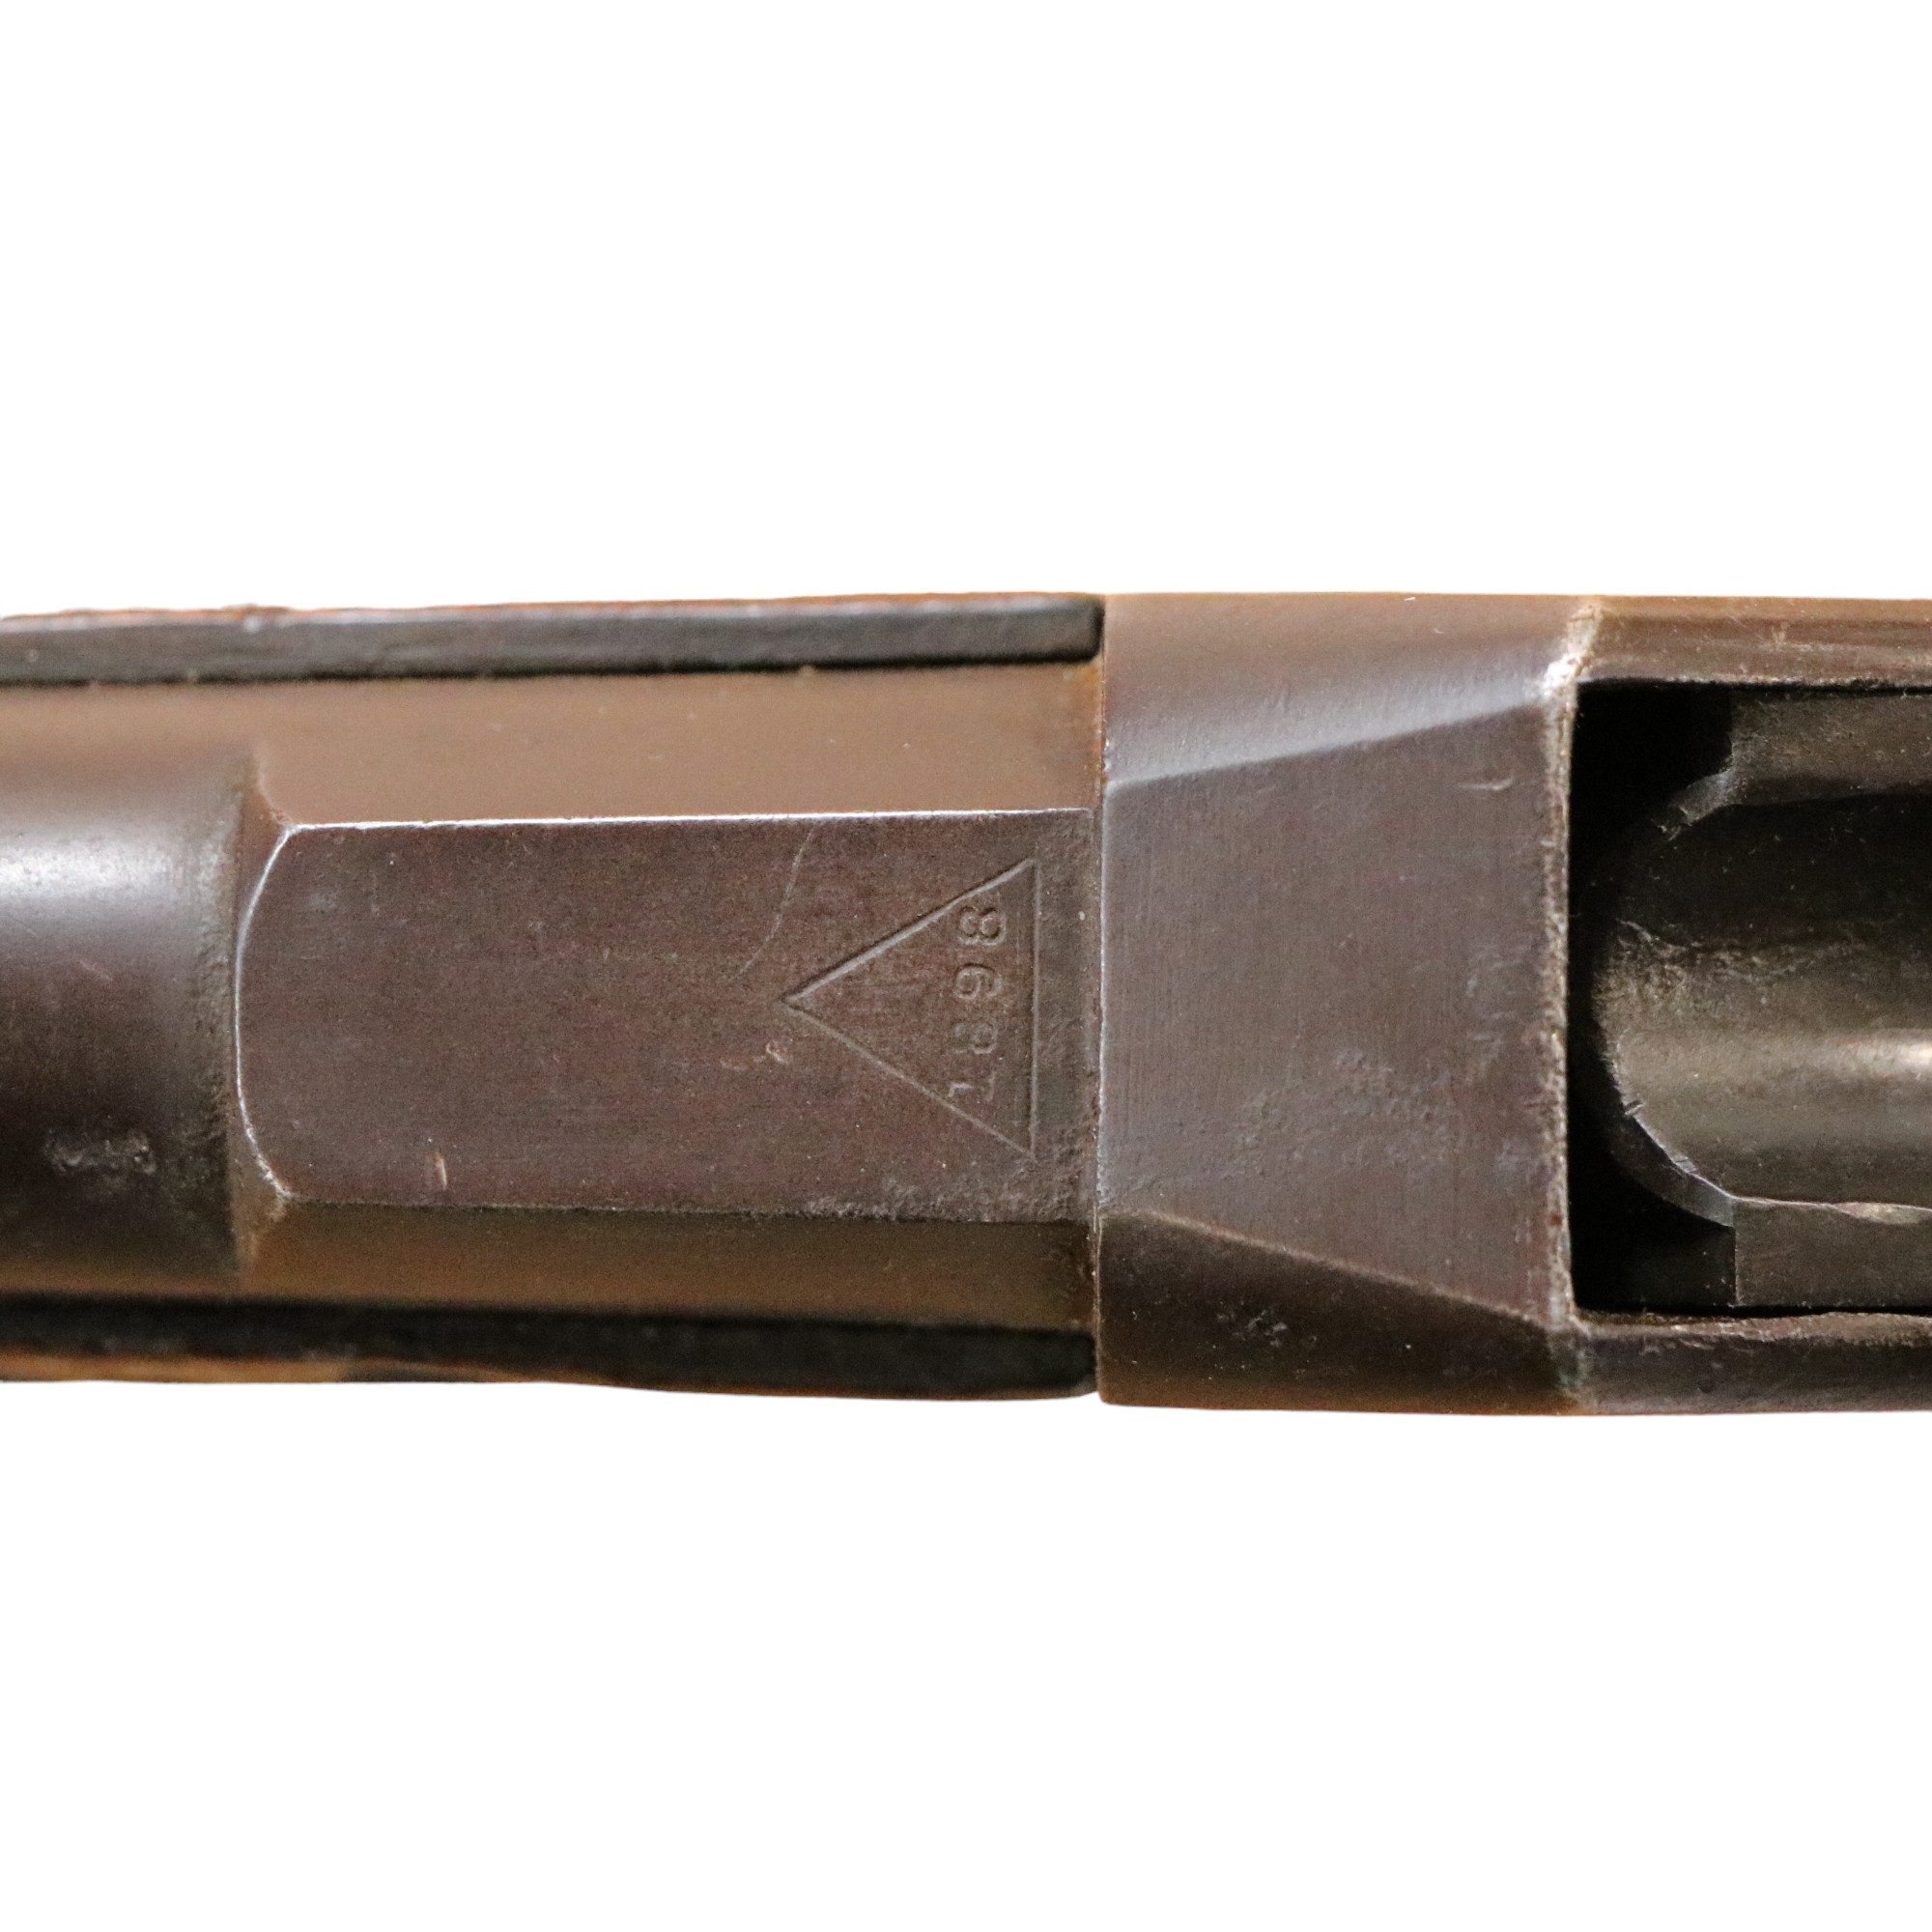 A Westley Richards Boer / ZAR (Zuid Afikaansche Republiek) "Improved Martini Henry" rifle, .577/.450 - Image 6 of 10